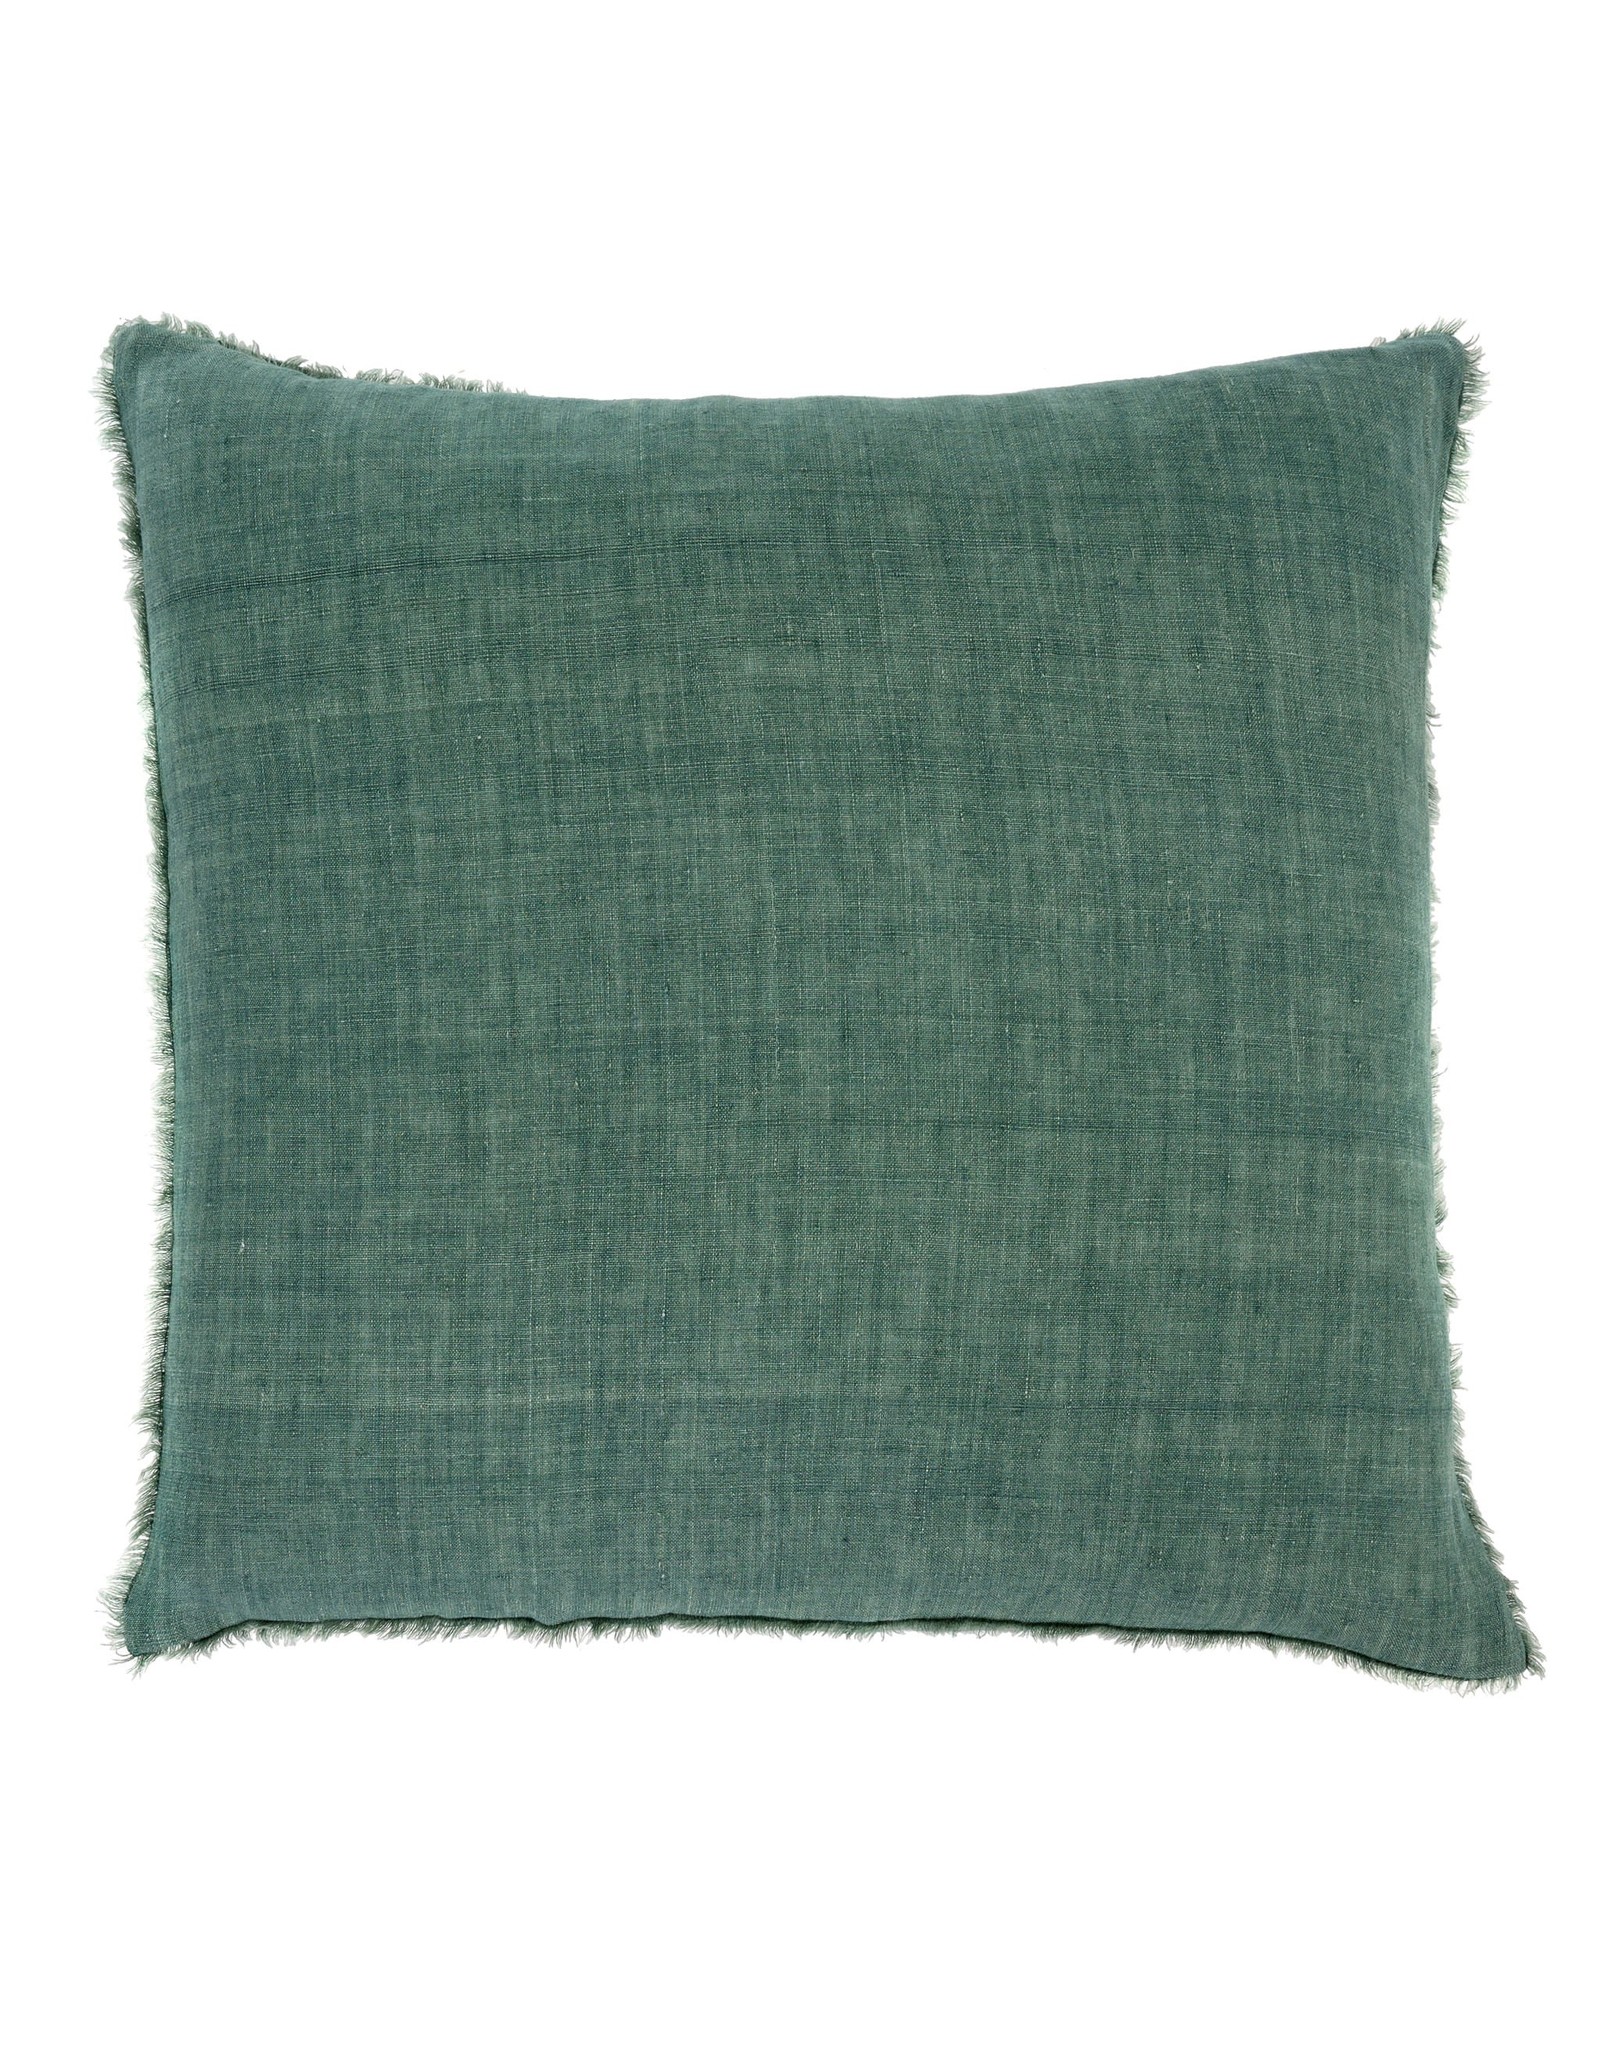 Lina Linen Pillow - Celeste Green- 24" x 24"